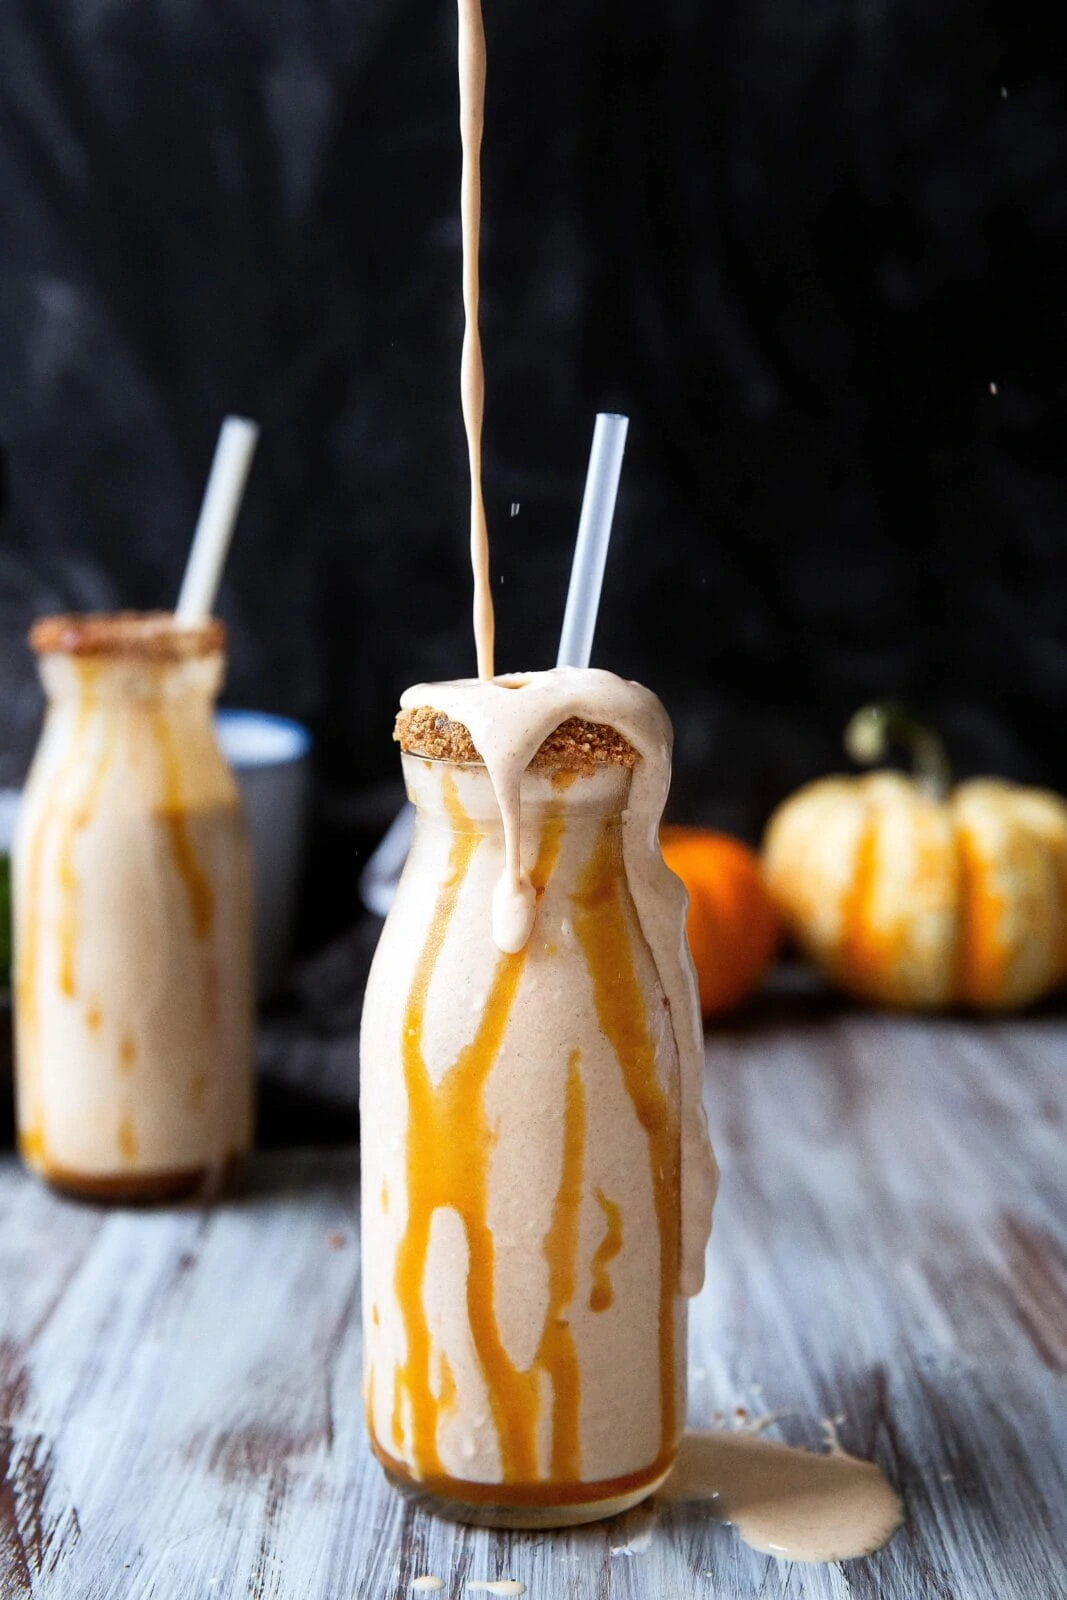 A ridiculously easy boozy pumpkin milkshake with graham, caramel, and bourbon. Hello holiday entertaining!